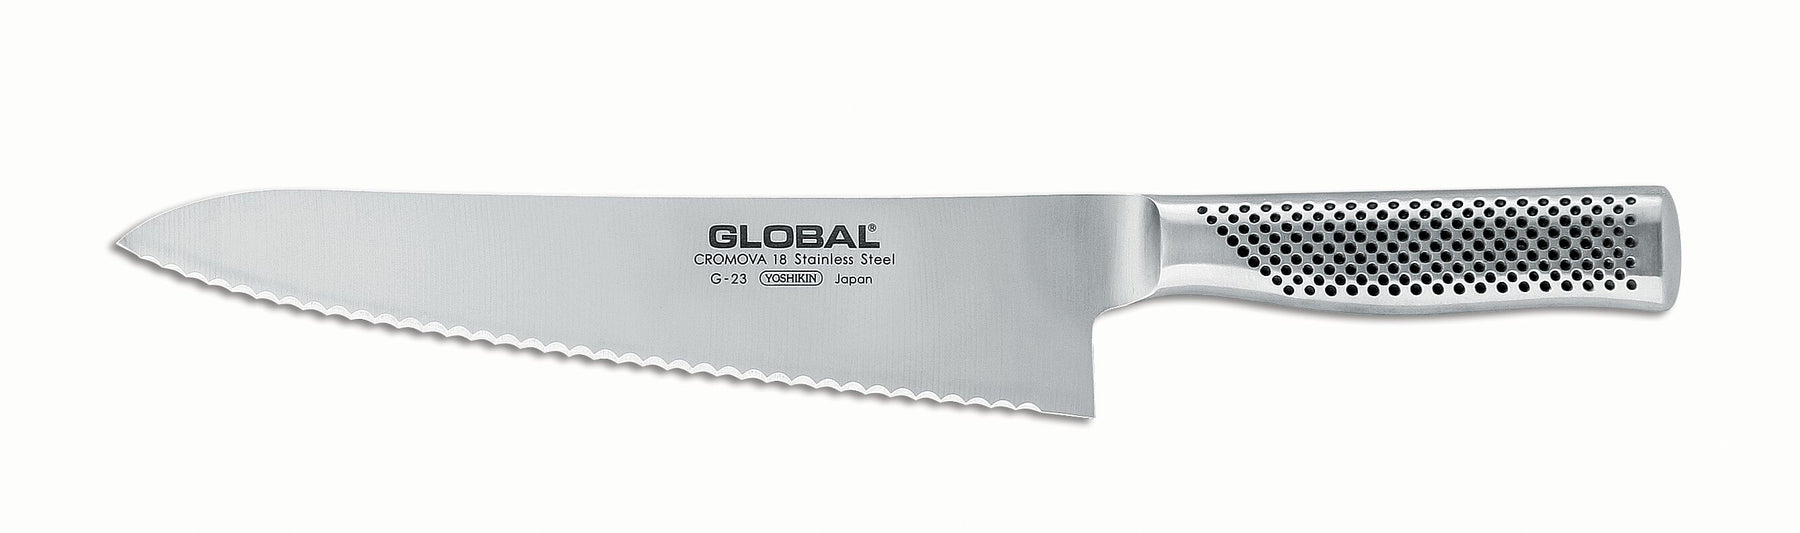 Global G23 10 inch, 24cm Bread Knife Stainles Steel